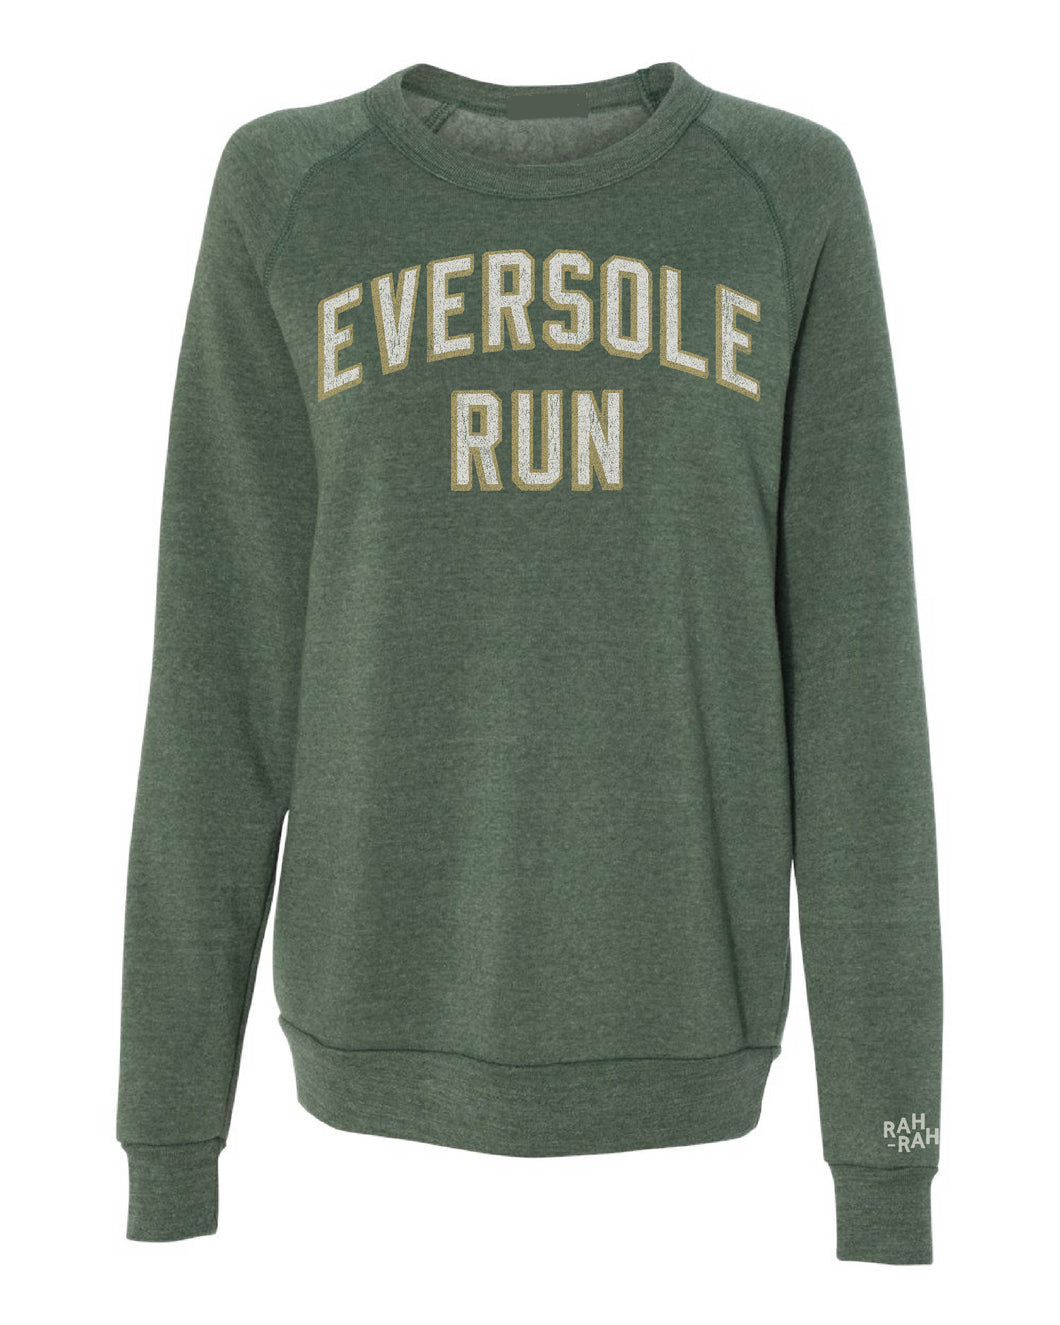 Eversole Run Block Adult Green Sweatshirt